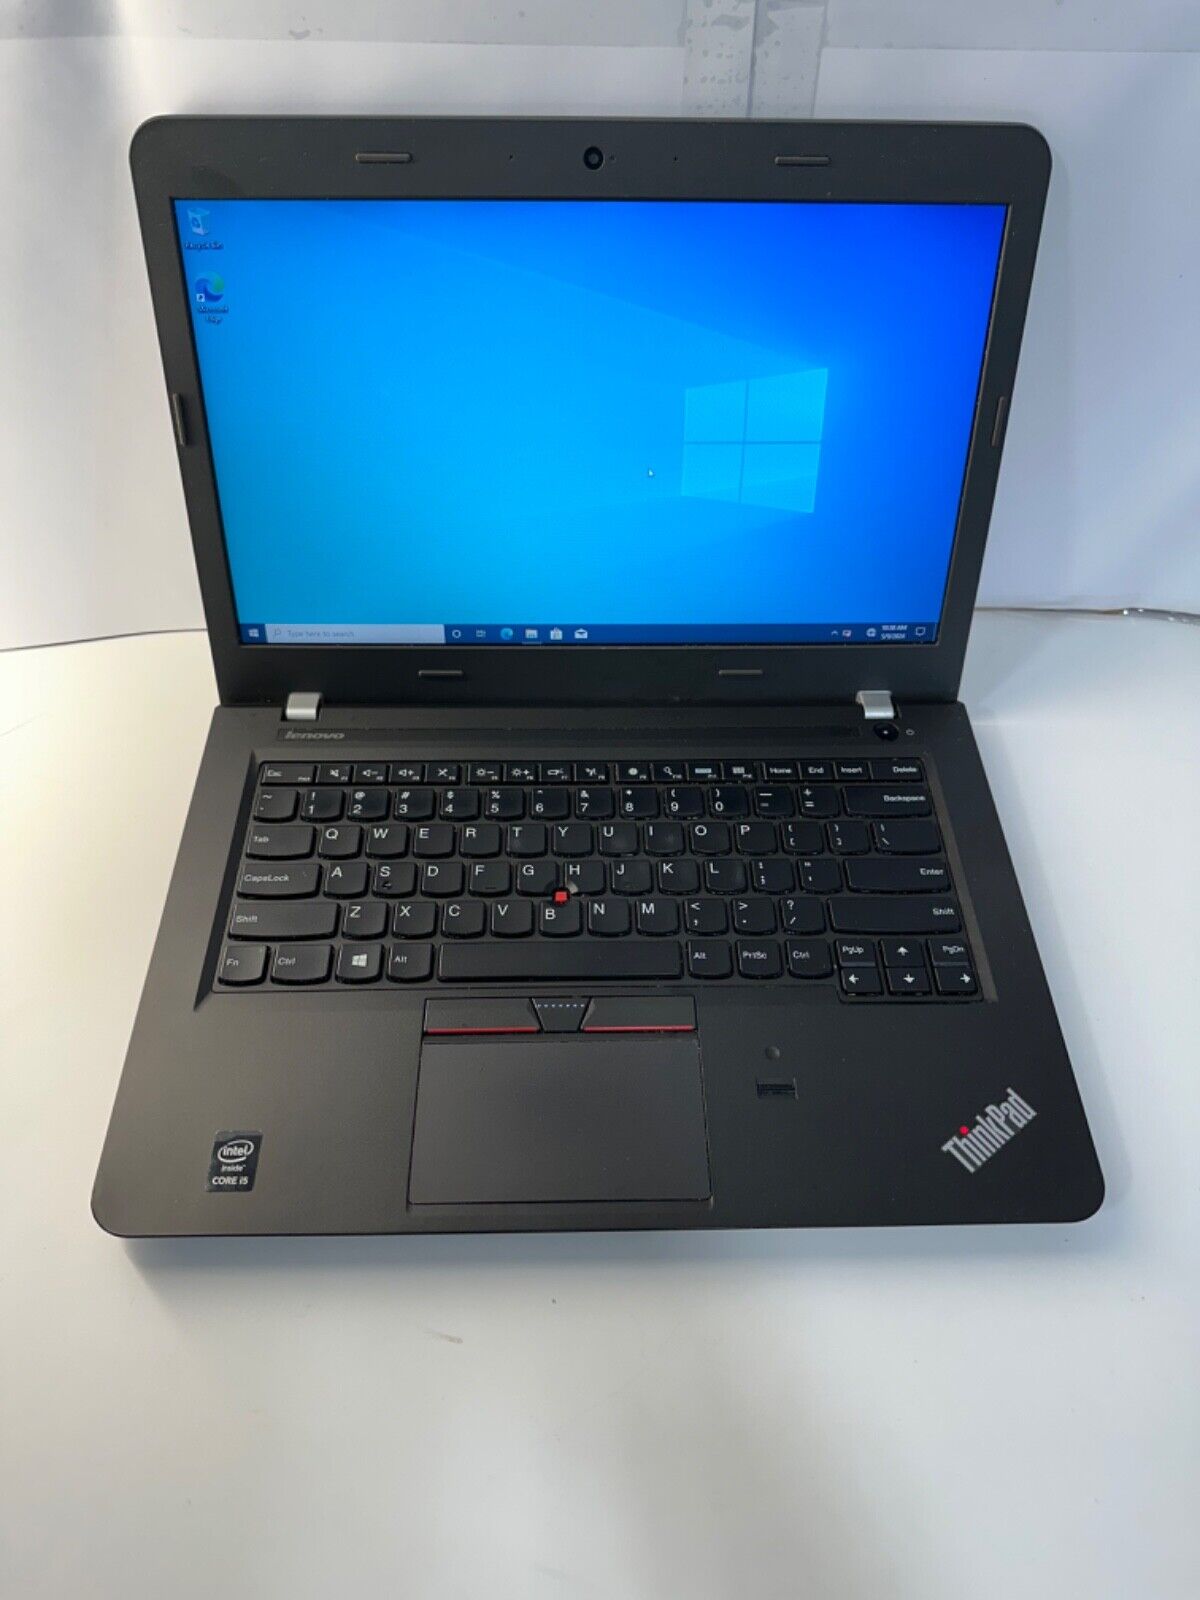 Lenovo ThinkPad E450 Intel Core i5-5200U 2.2GHz 8GB RAM 500GB HDD Win 10 Pro